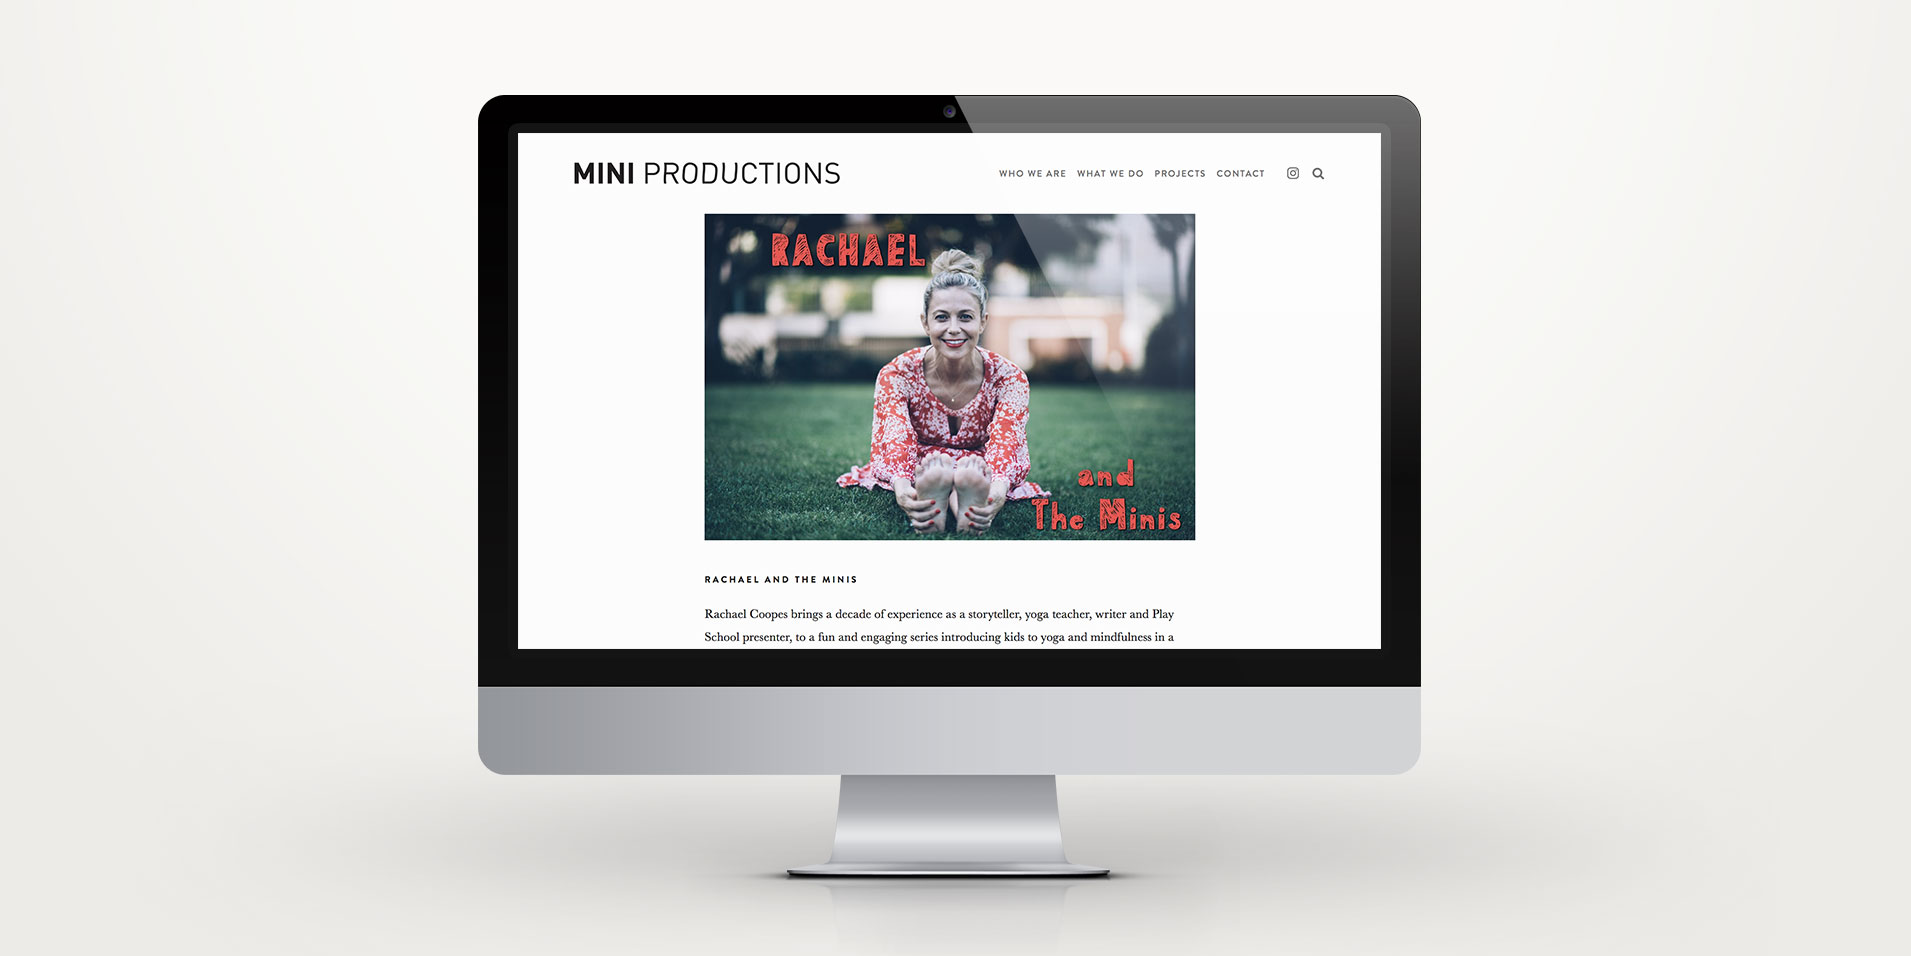 mini-productions-imac-presentation-5.jpg